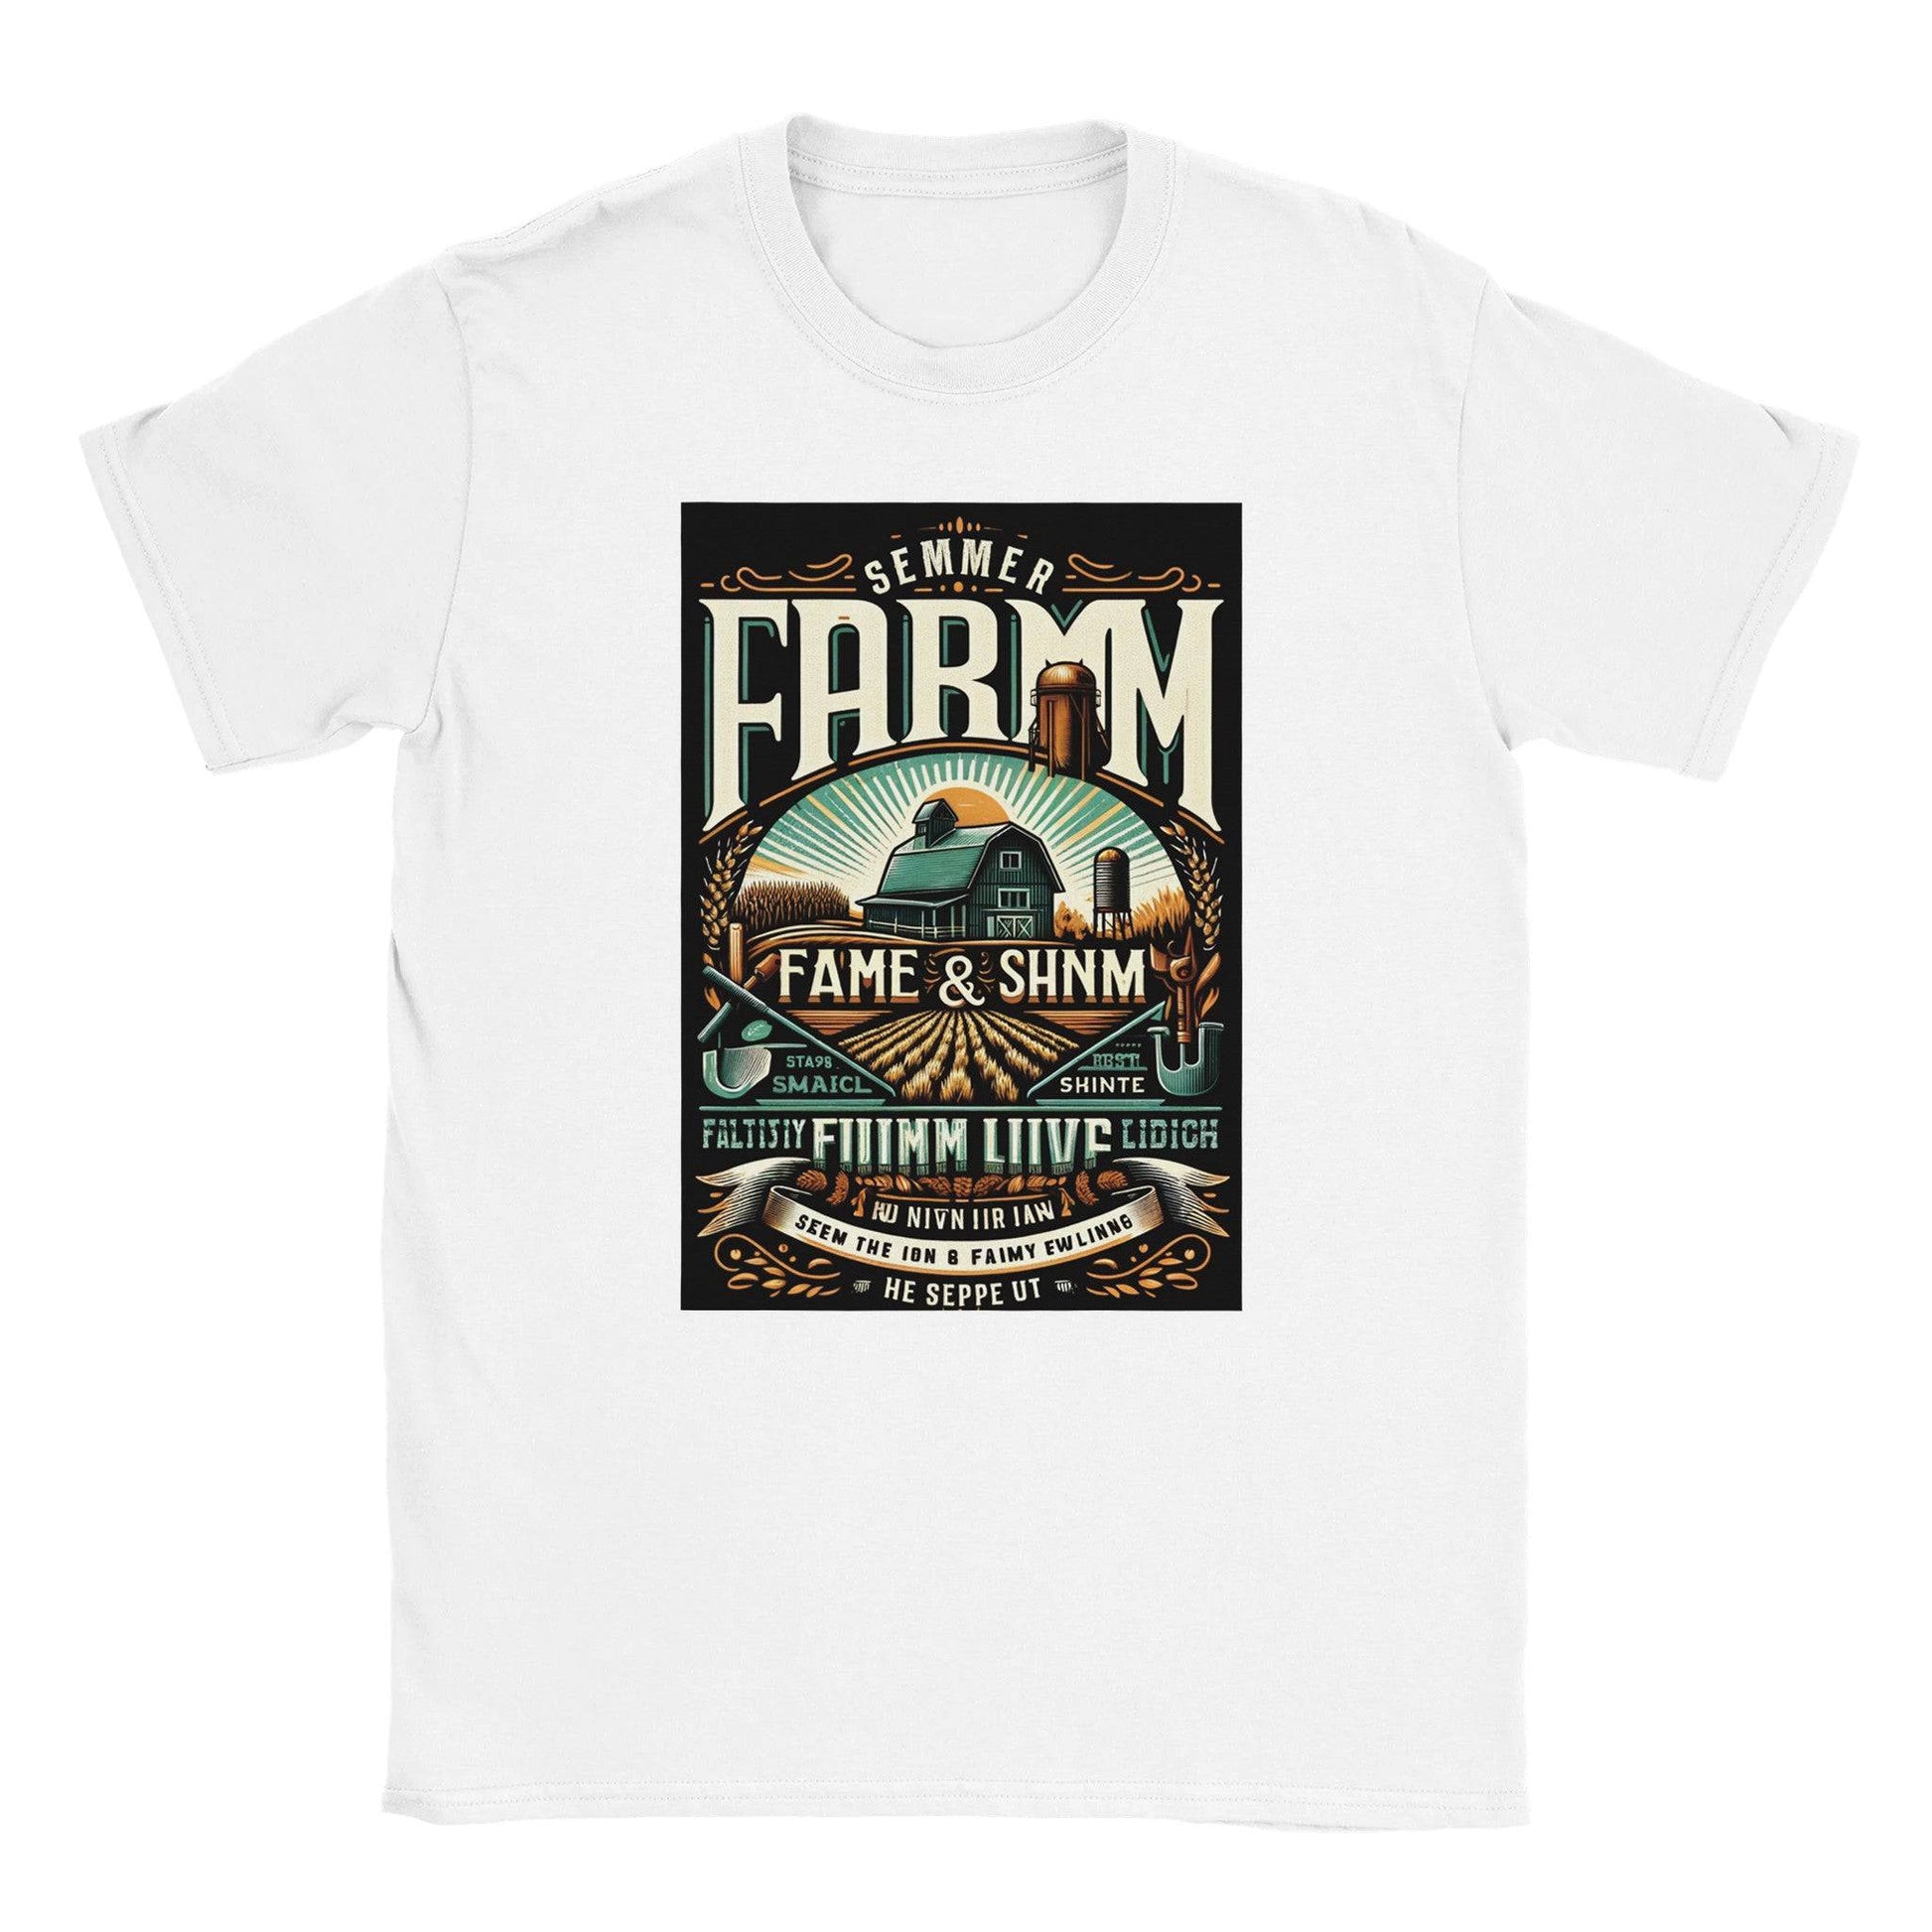 Classic Crewneck "Farm Life" T-Shirt - 100% soft, breathable cotton - BeinCart